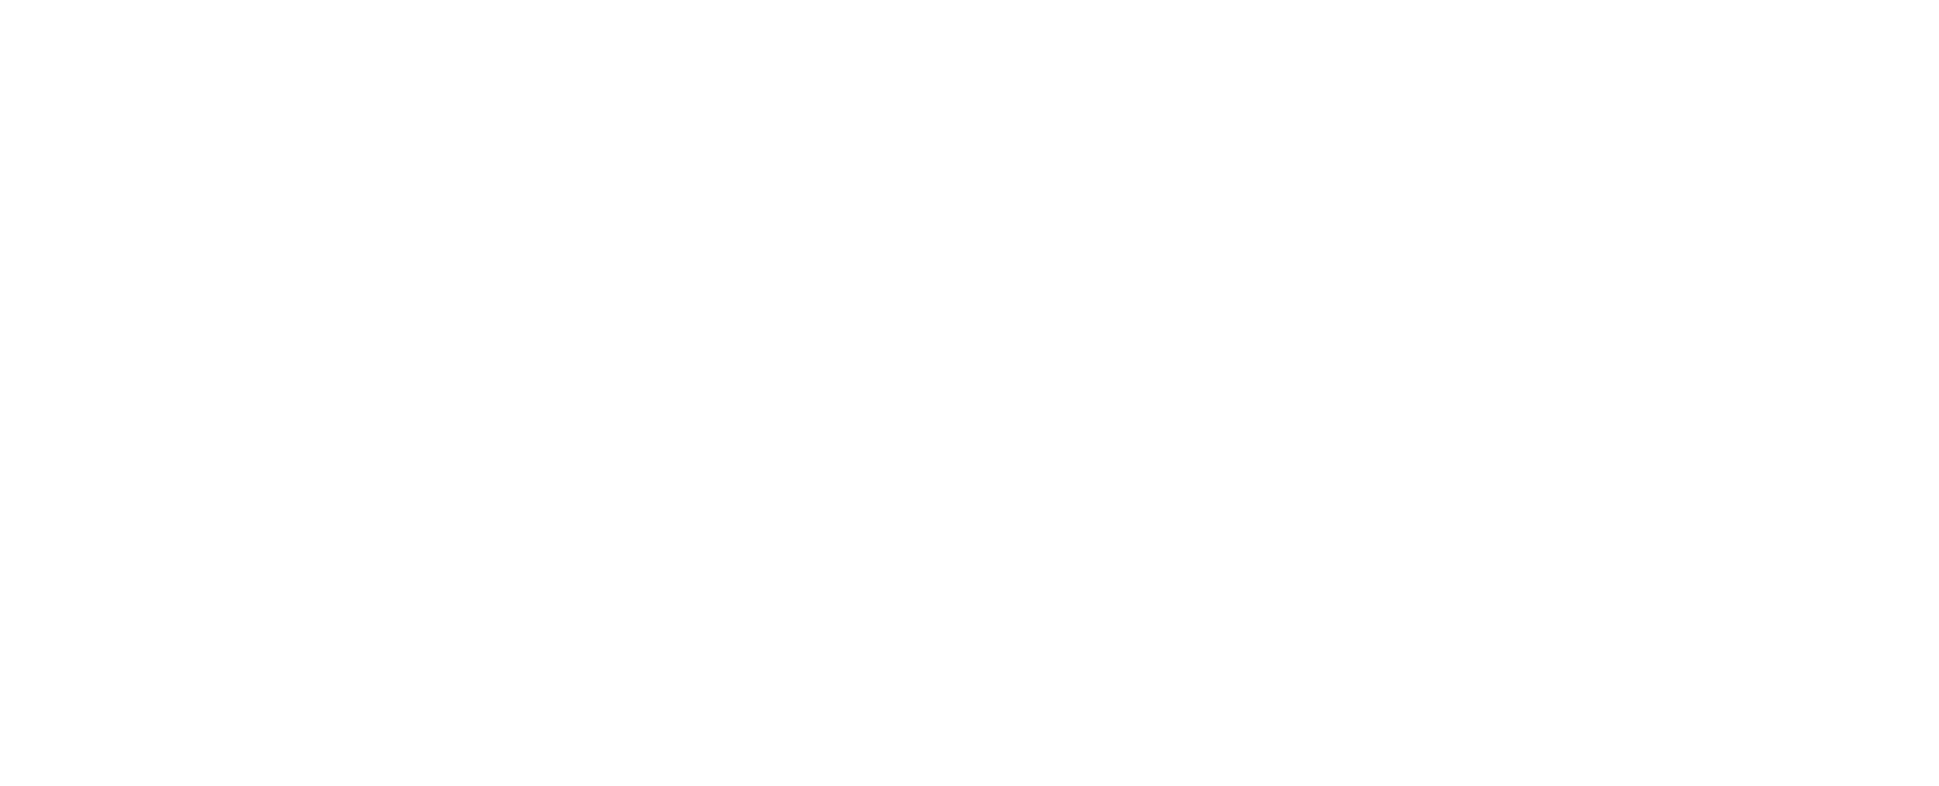 Hamilton park place memory care & assisted living logo.